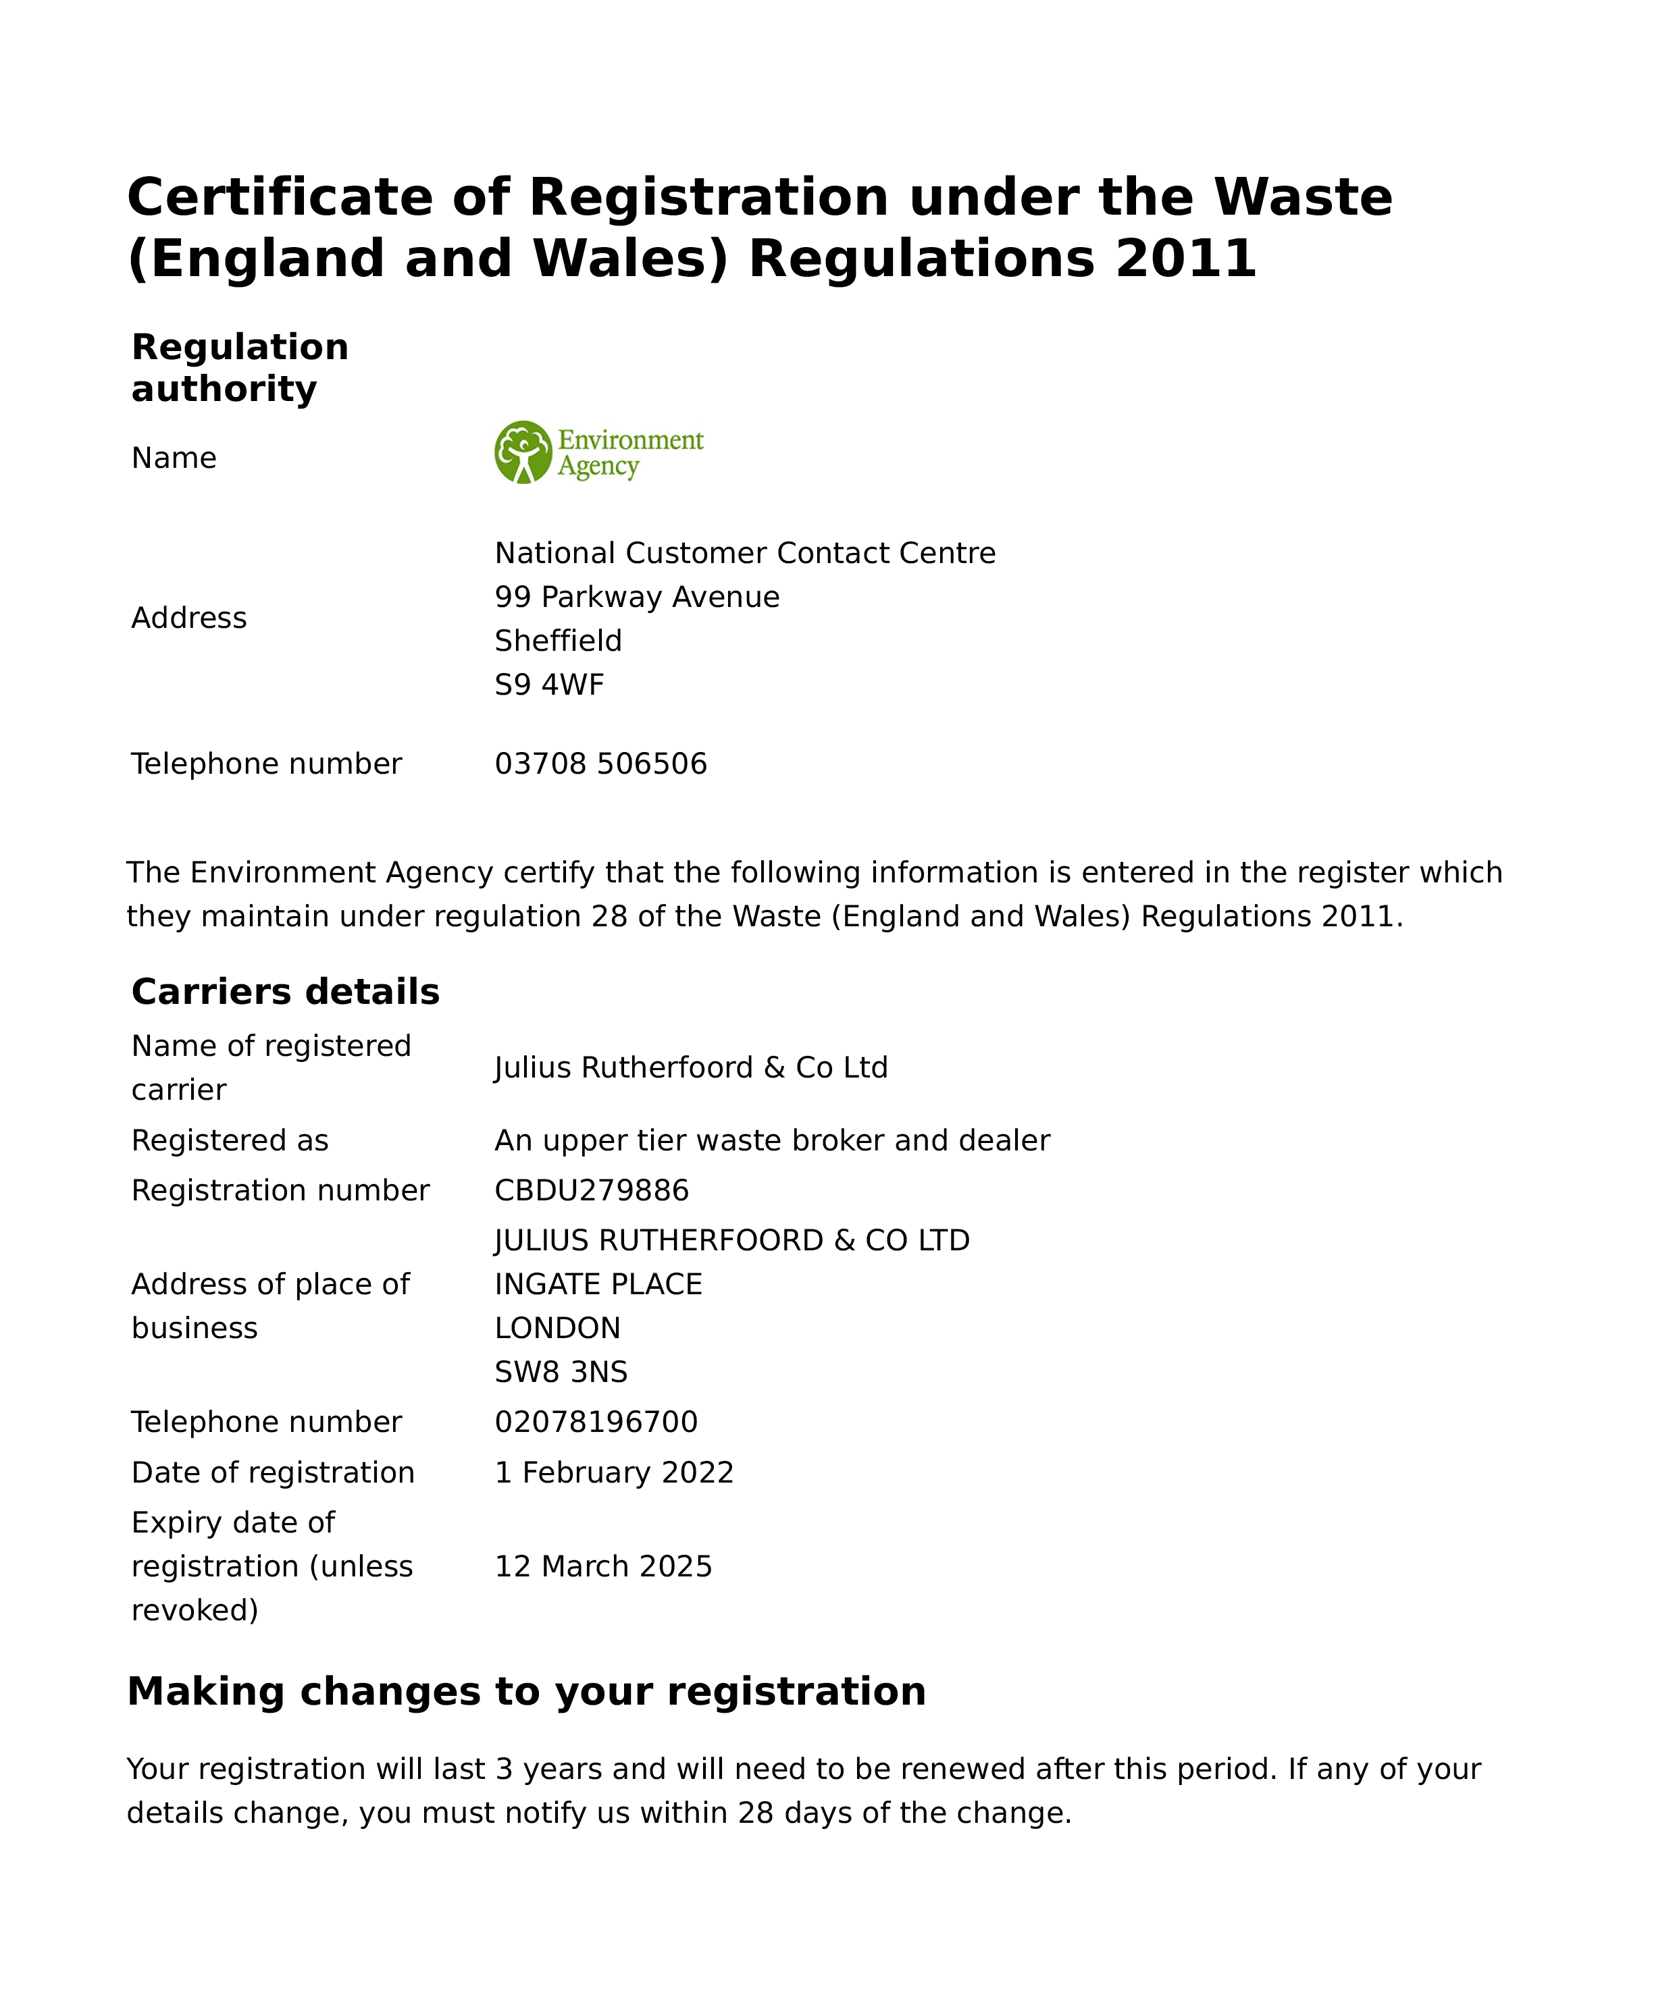 Certificate of Registration under the Waste Regulations